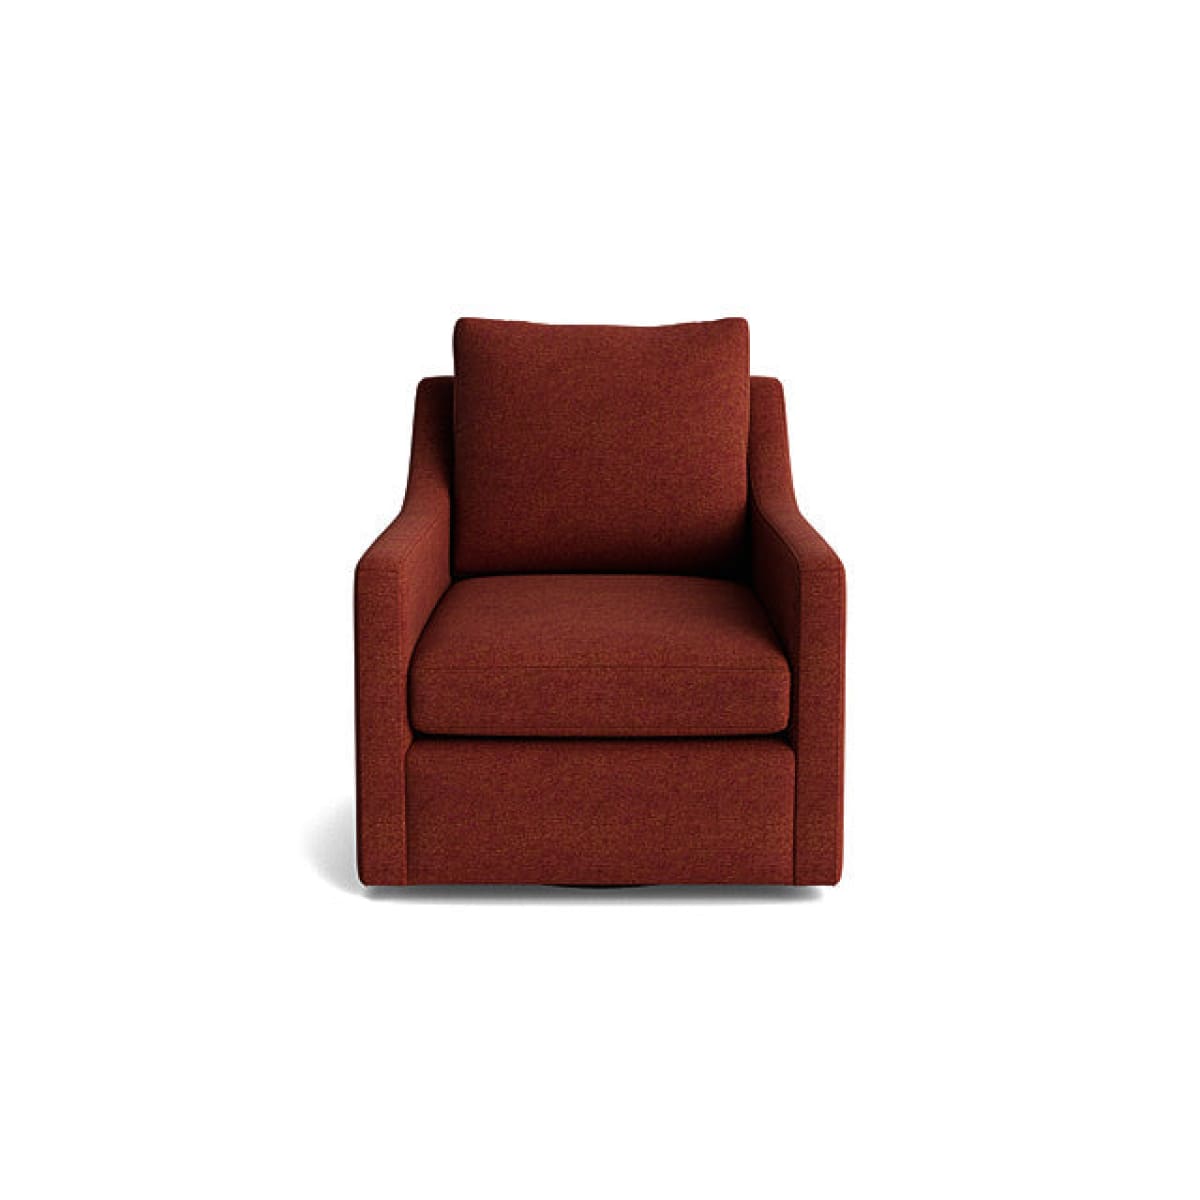 Grove Accent Chair - Entice Brick